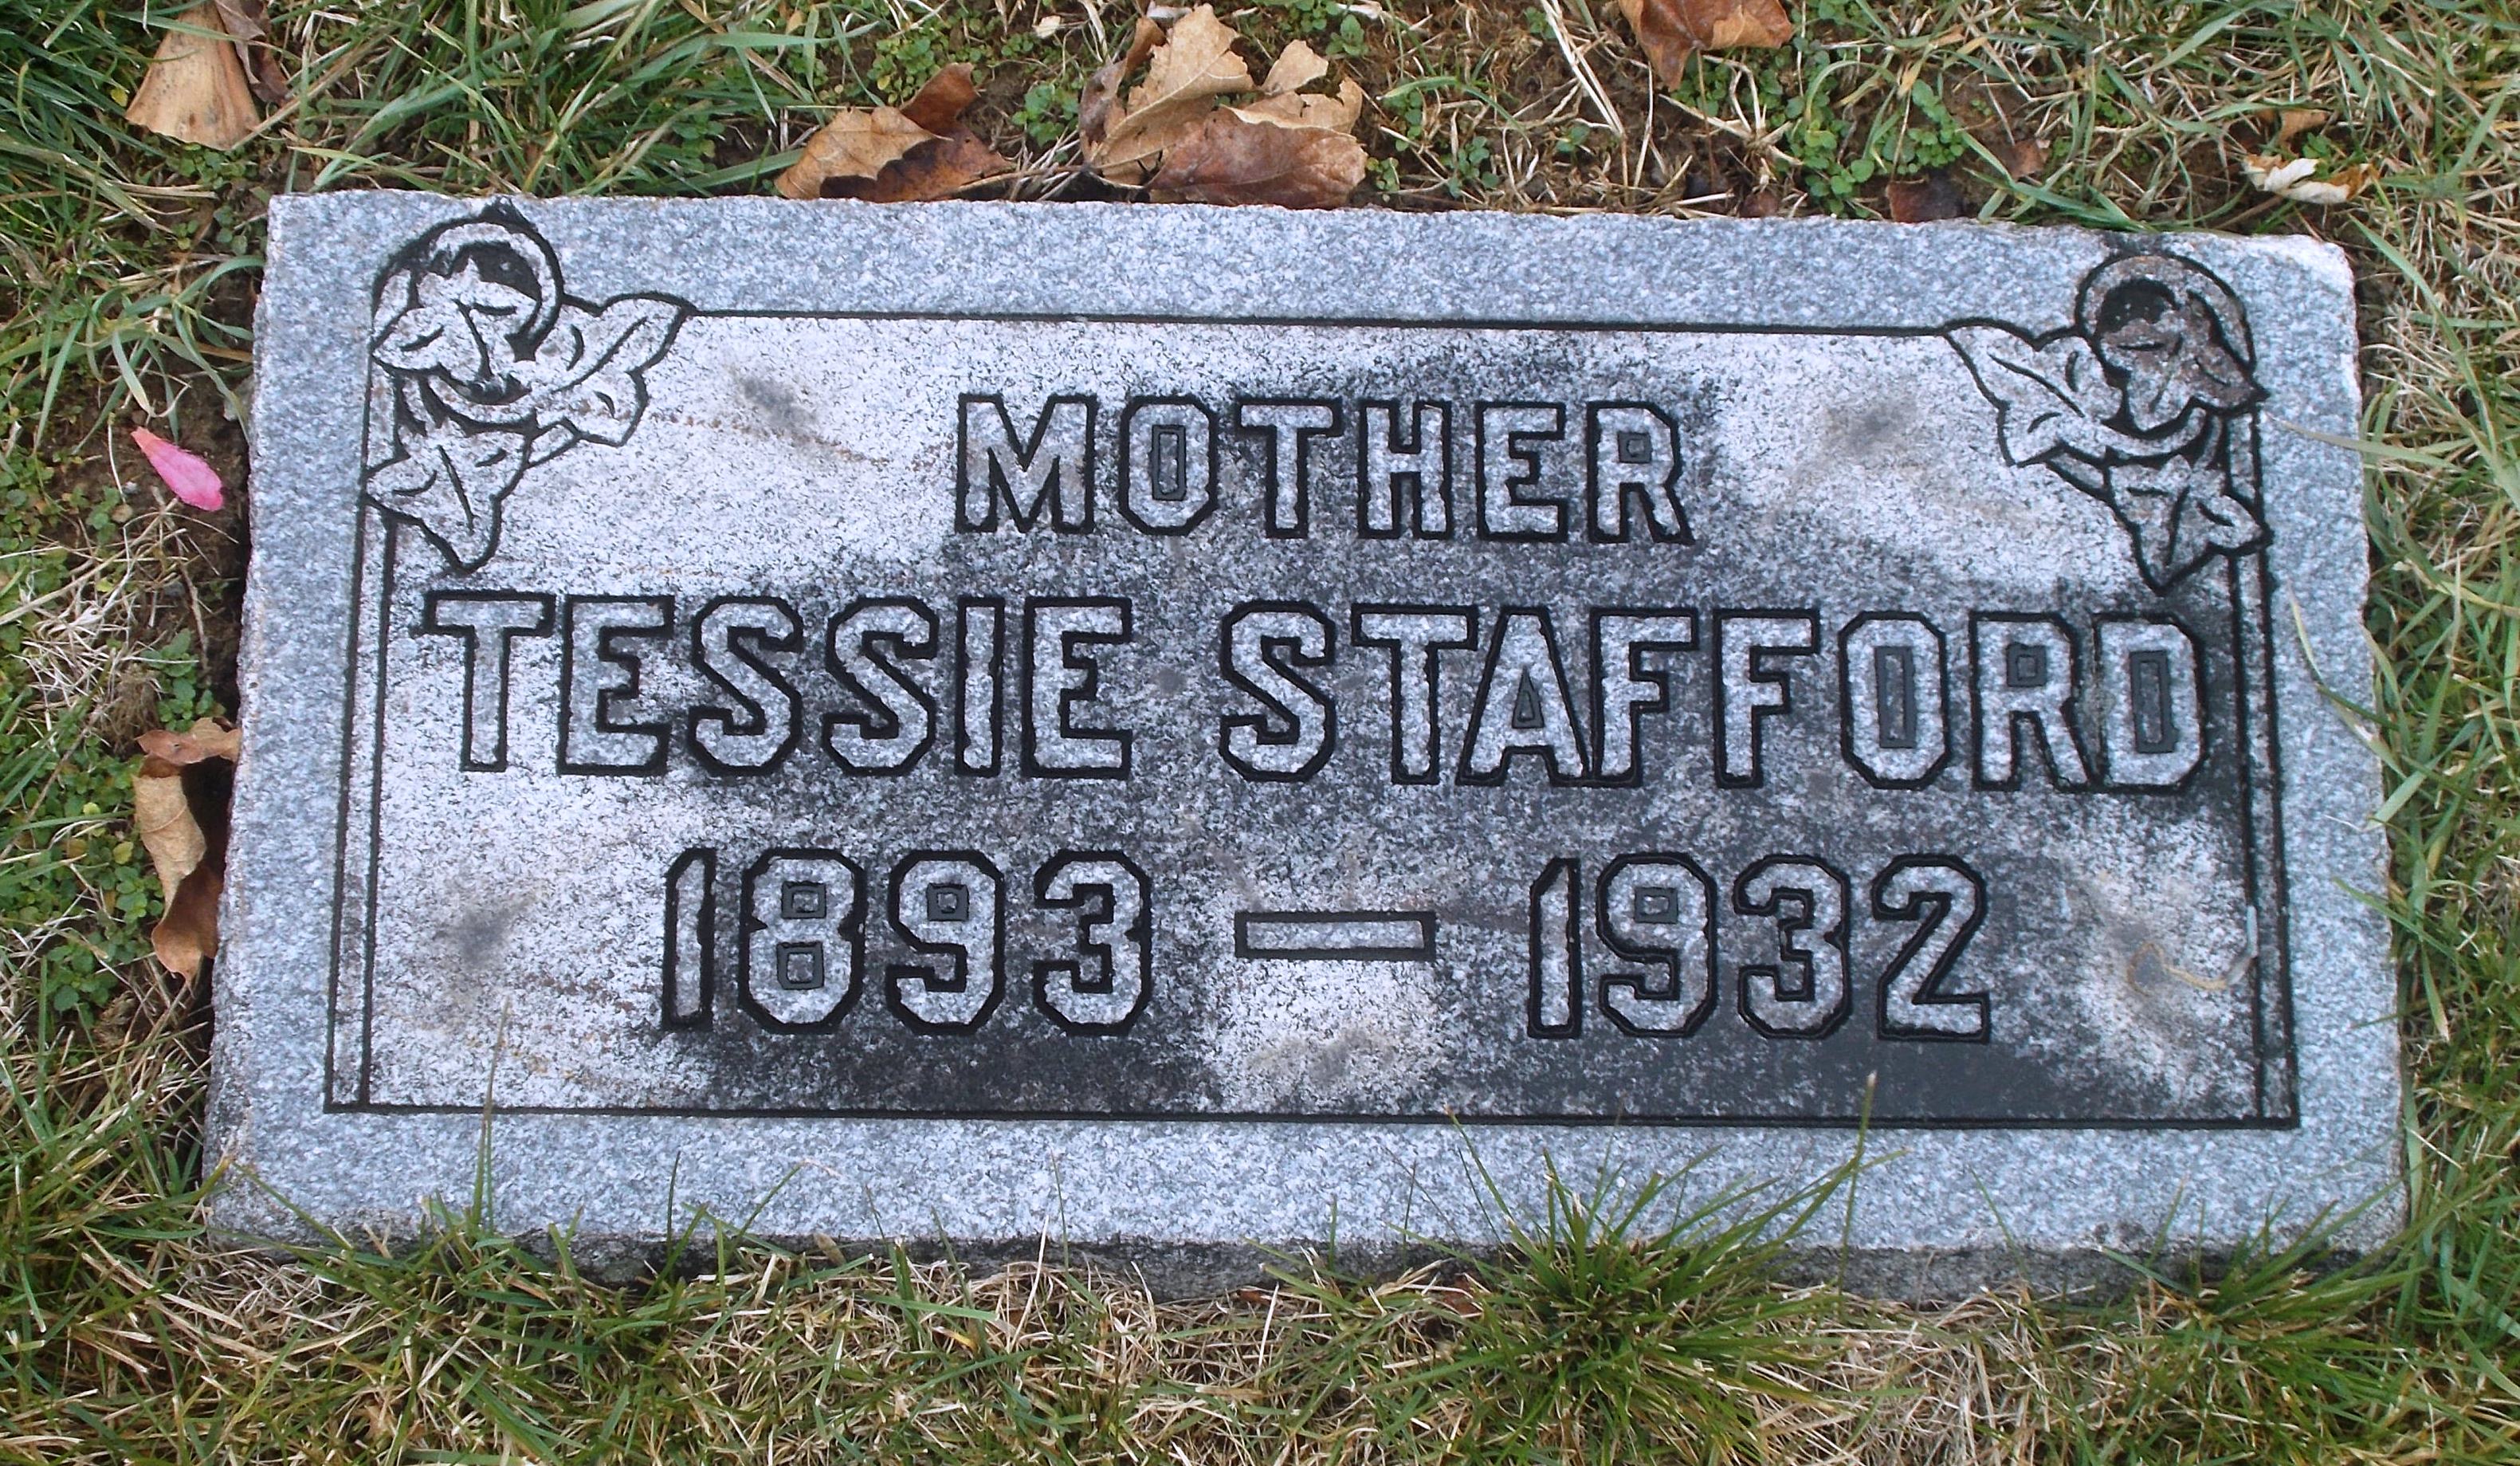 Tessie Stafford